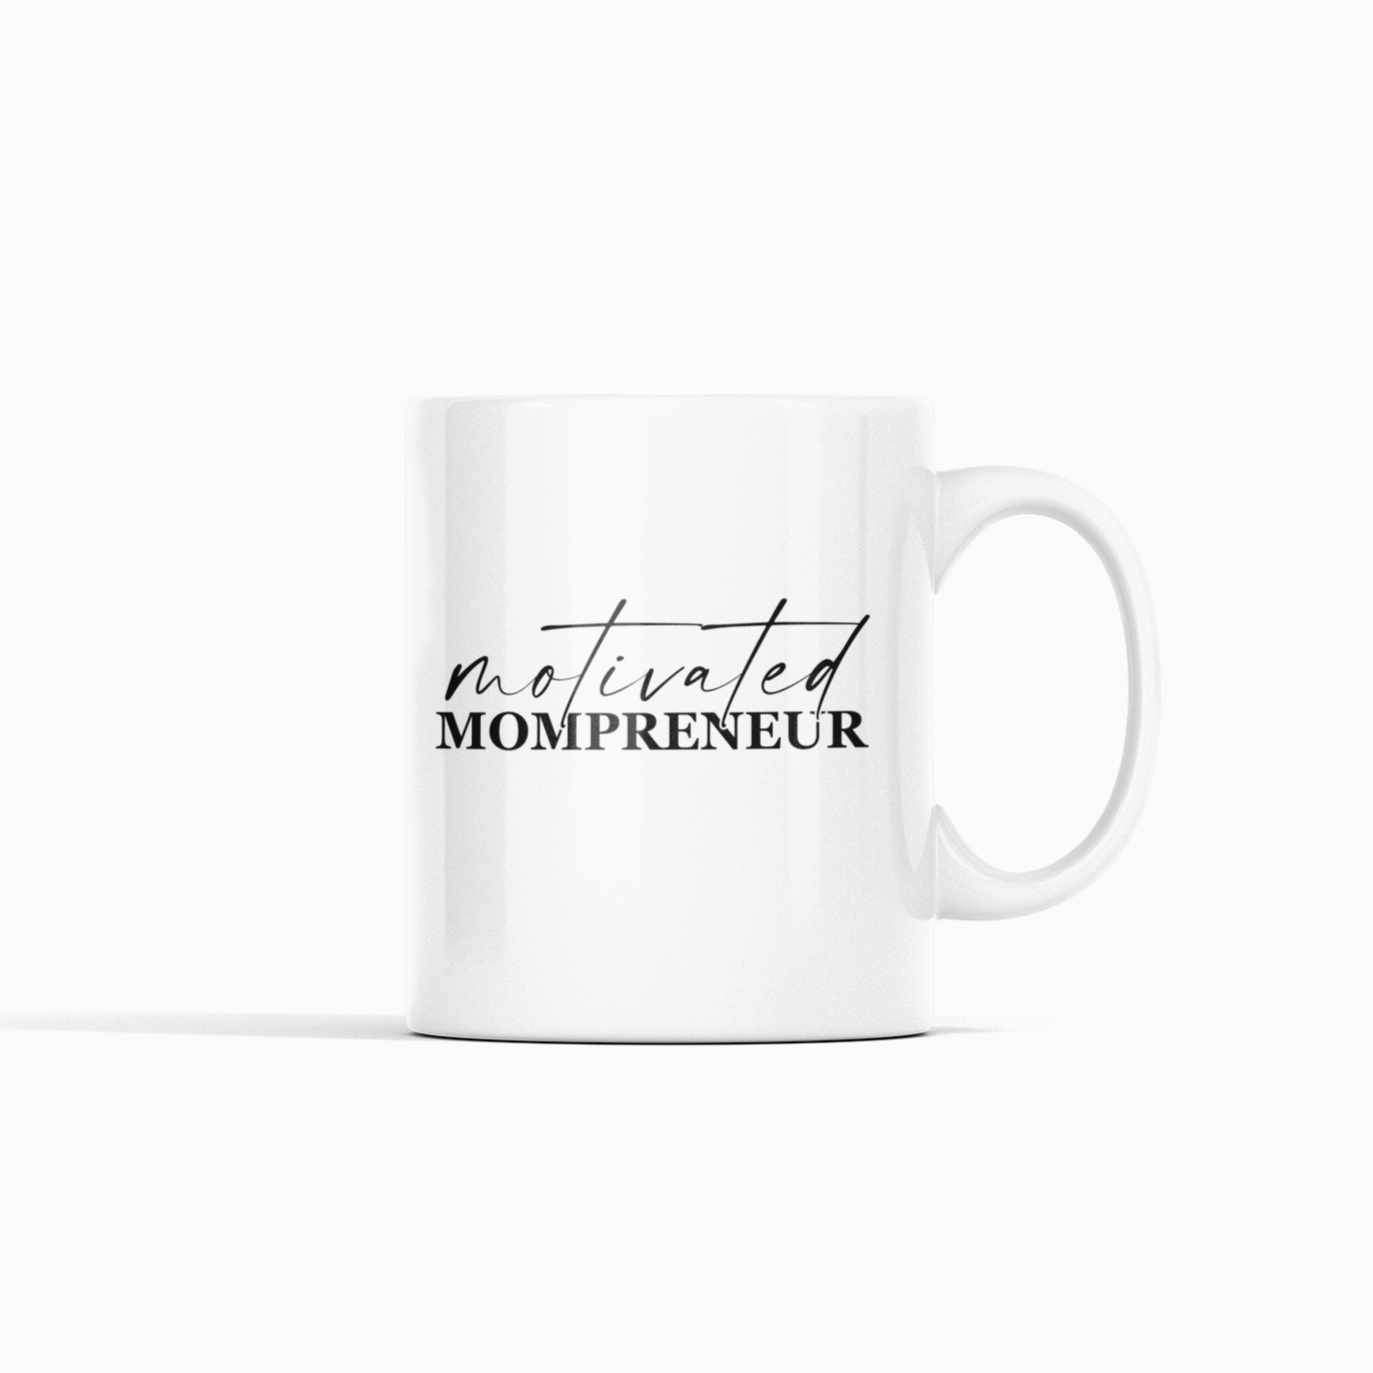 Motivated Mompreneur Coffee Mug, 11oz - PR Designs, LLC